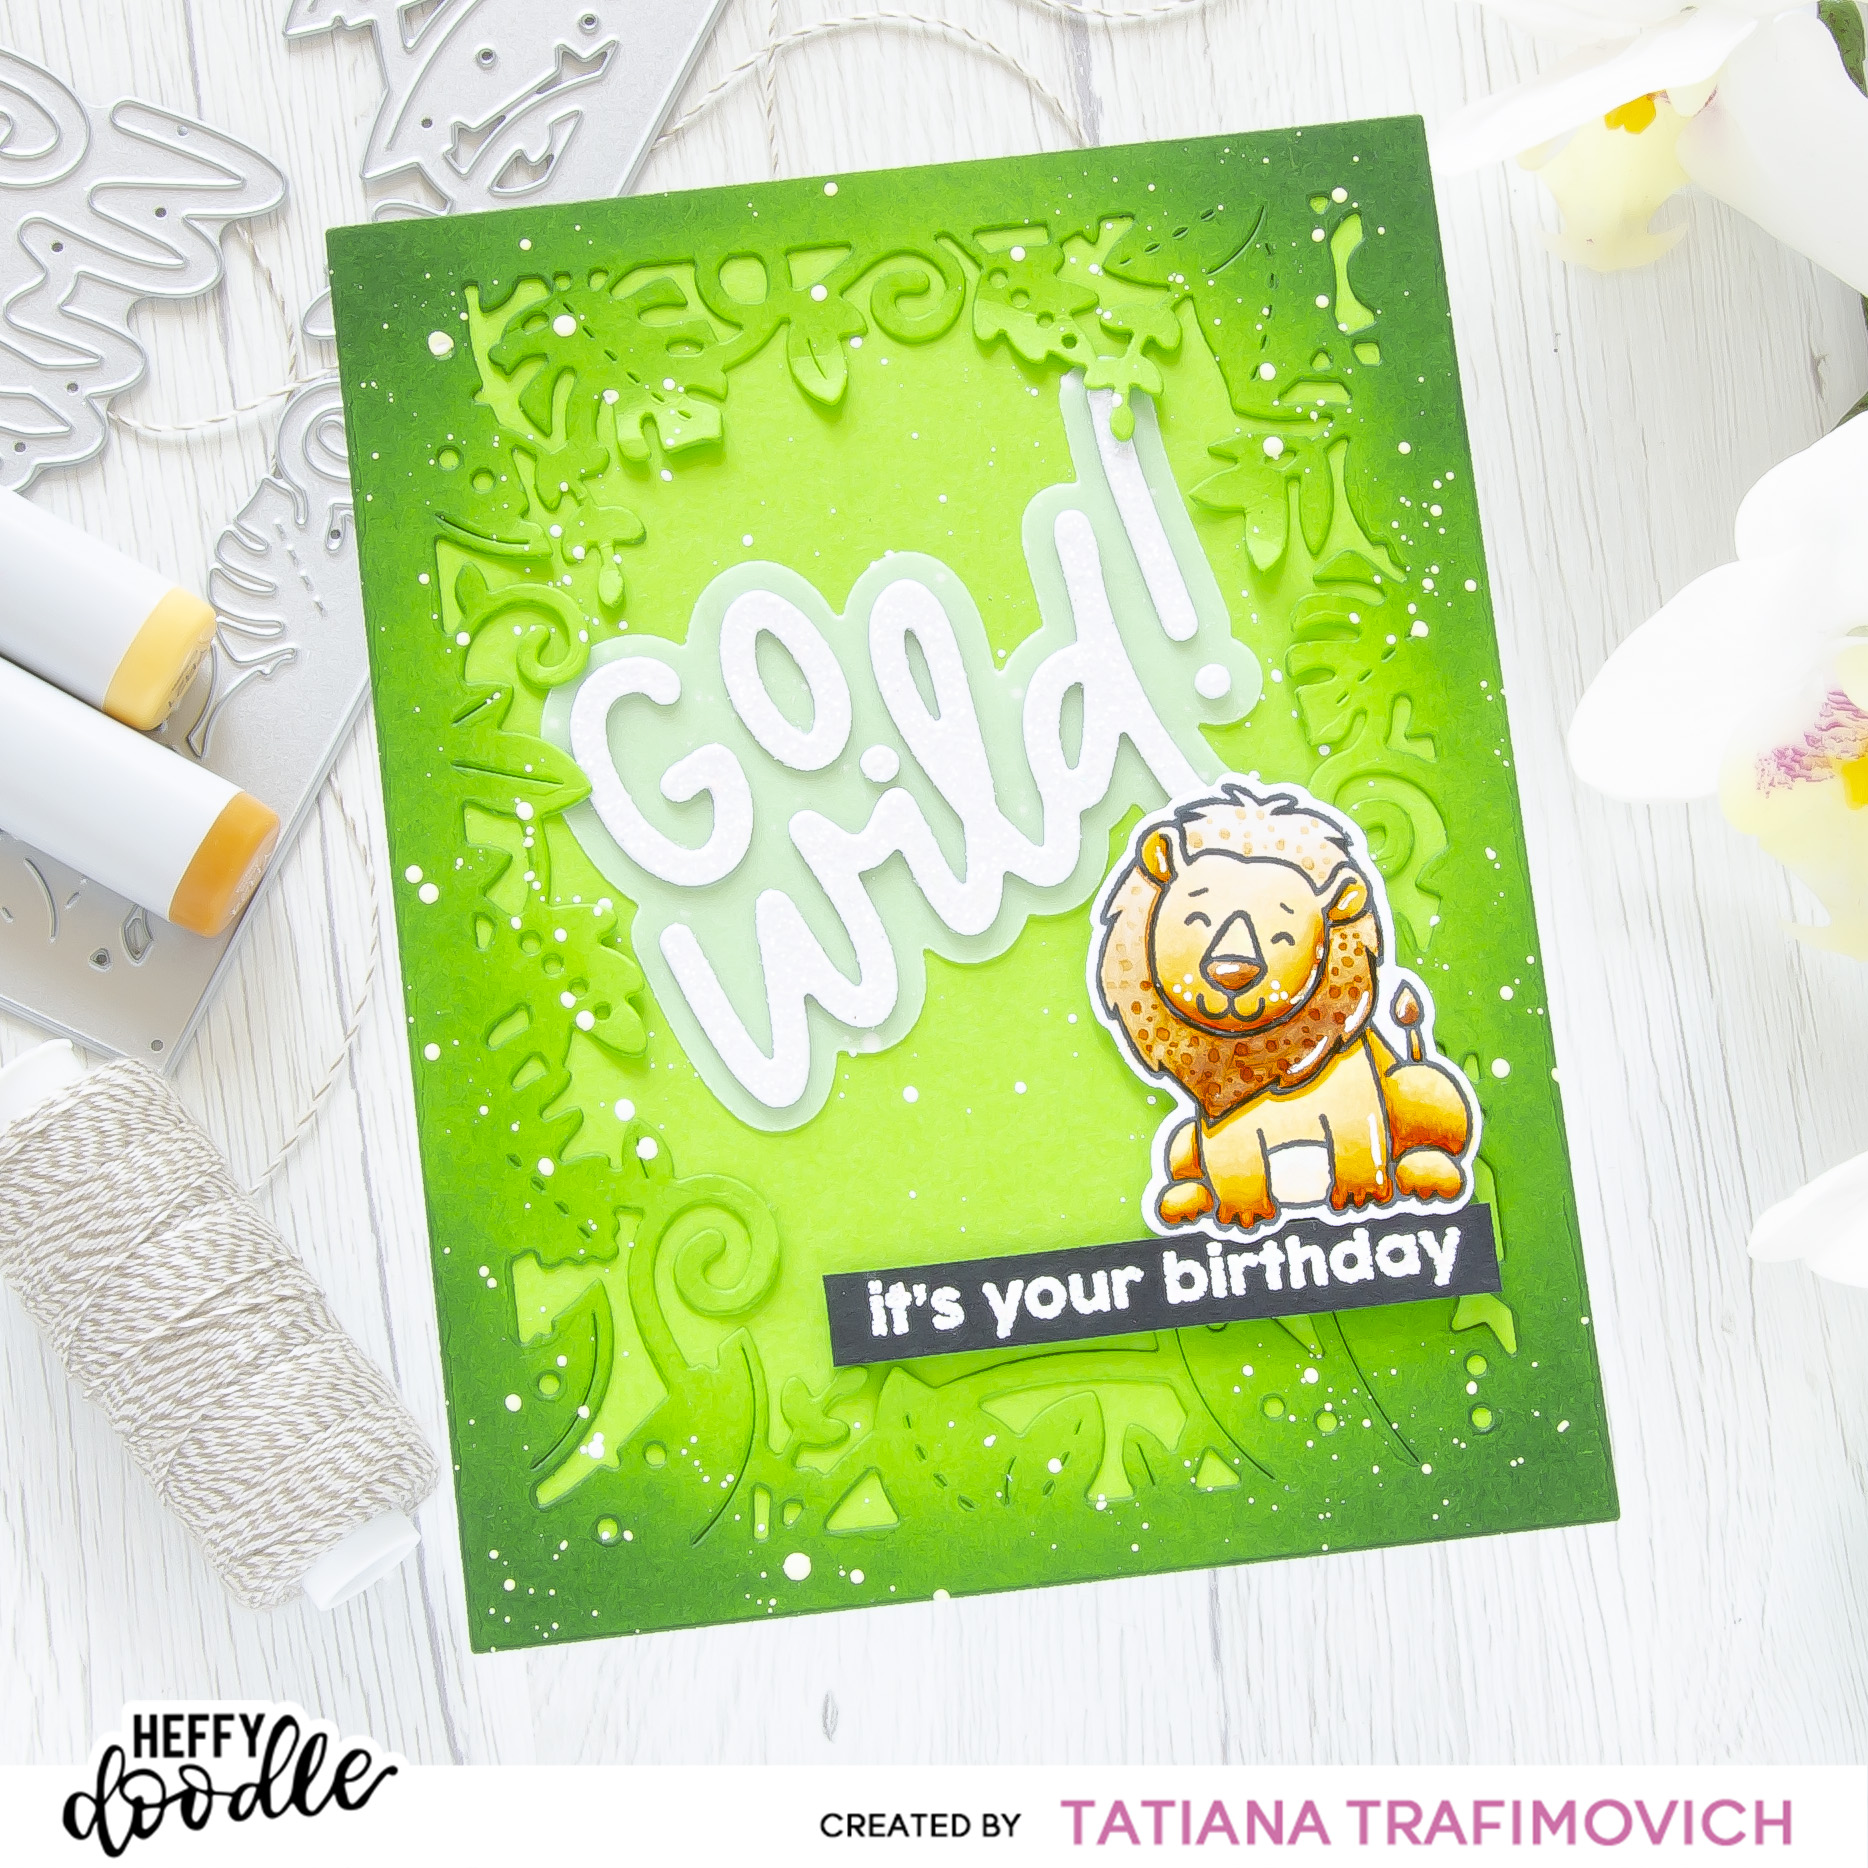 It's Your Birthday! Go Wild! #handmade card by Tatiana Trafimovich #tatianacraftandart - stamps and dies by Heffy Doodle #heffydoodle